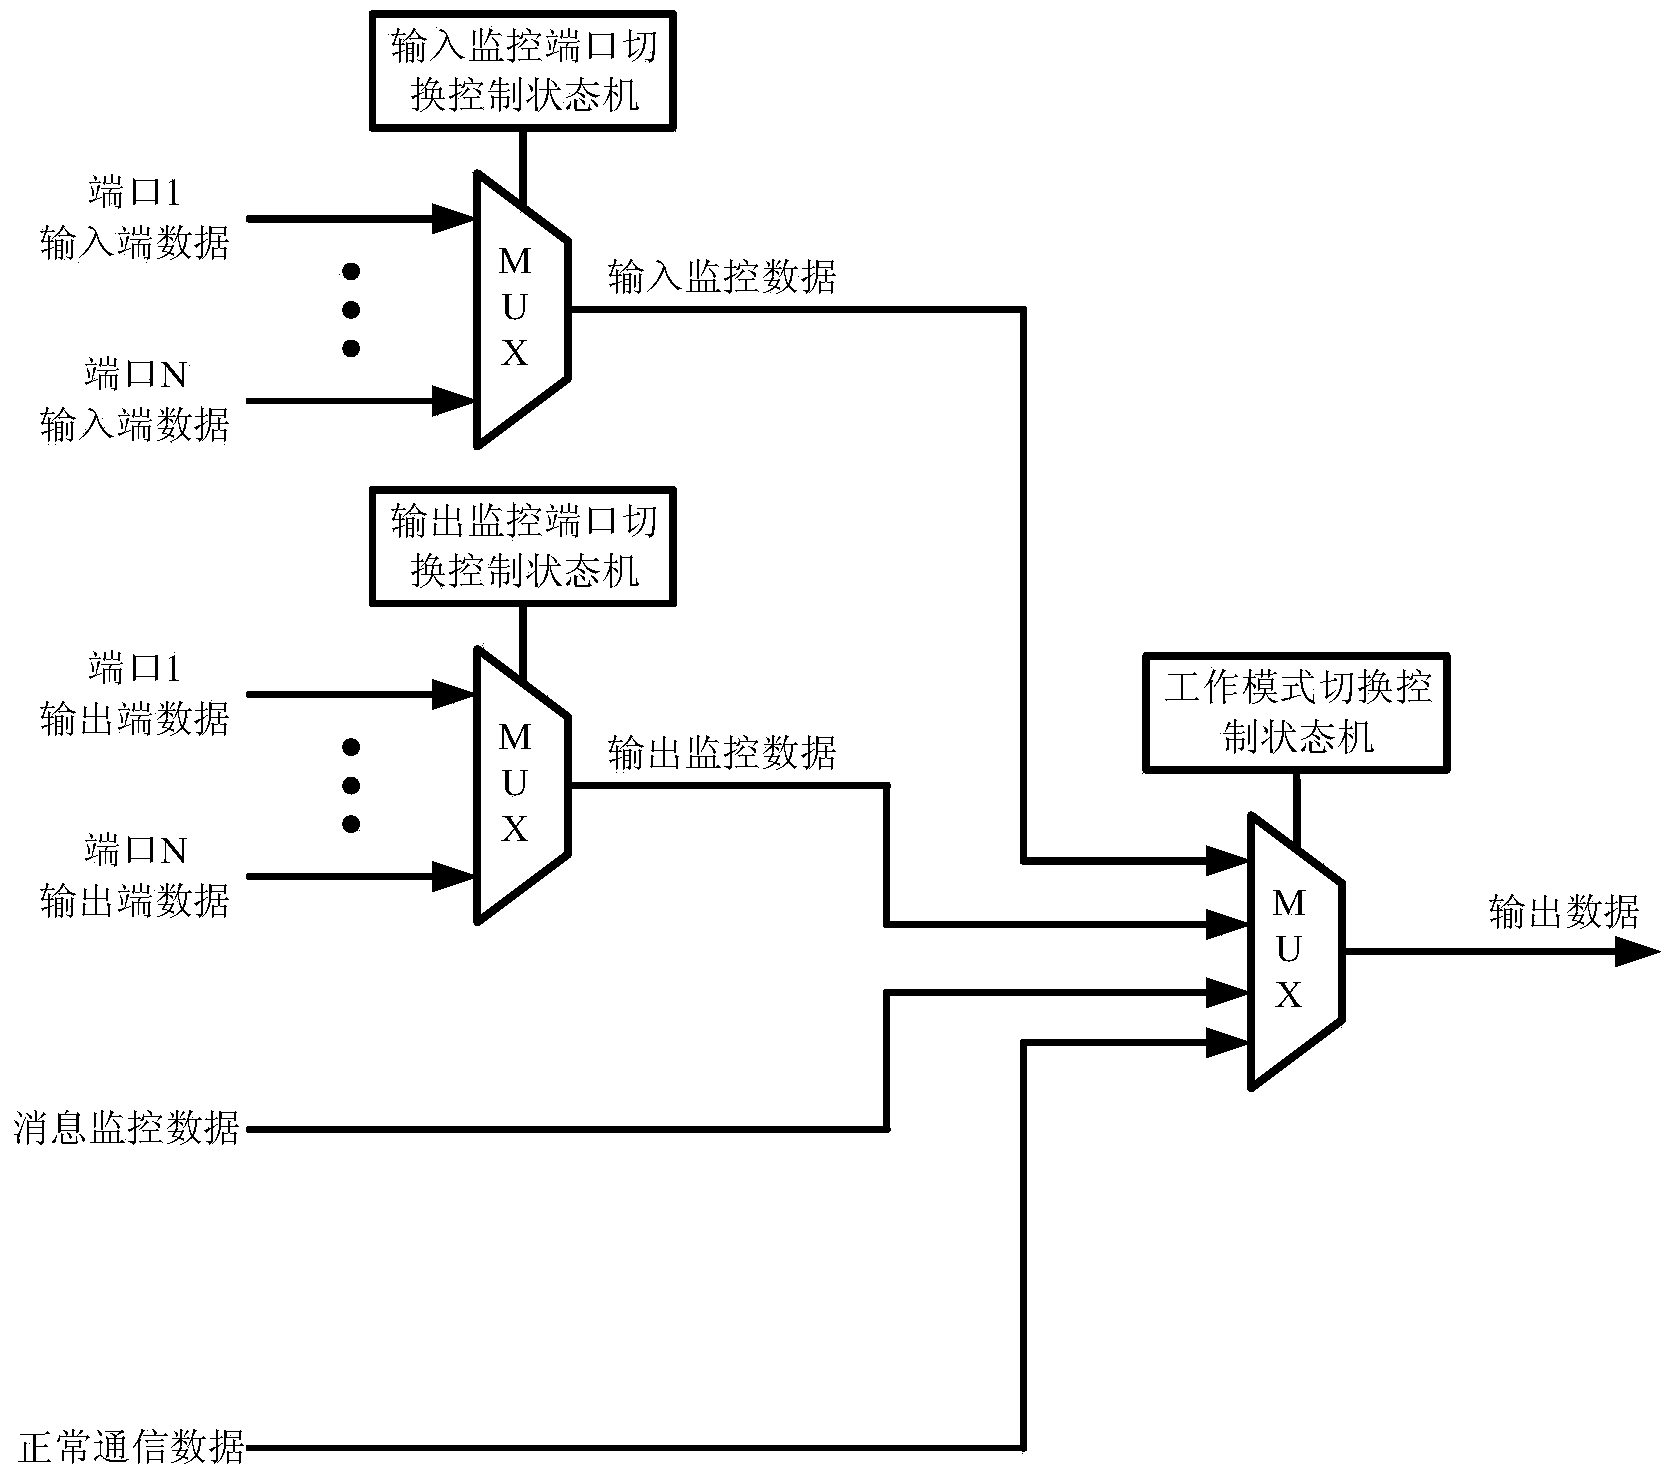 Monitoring scheme switching method based on FC switch